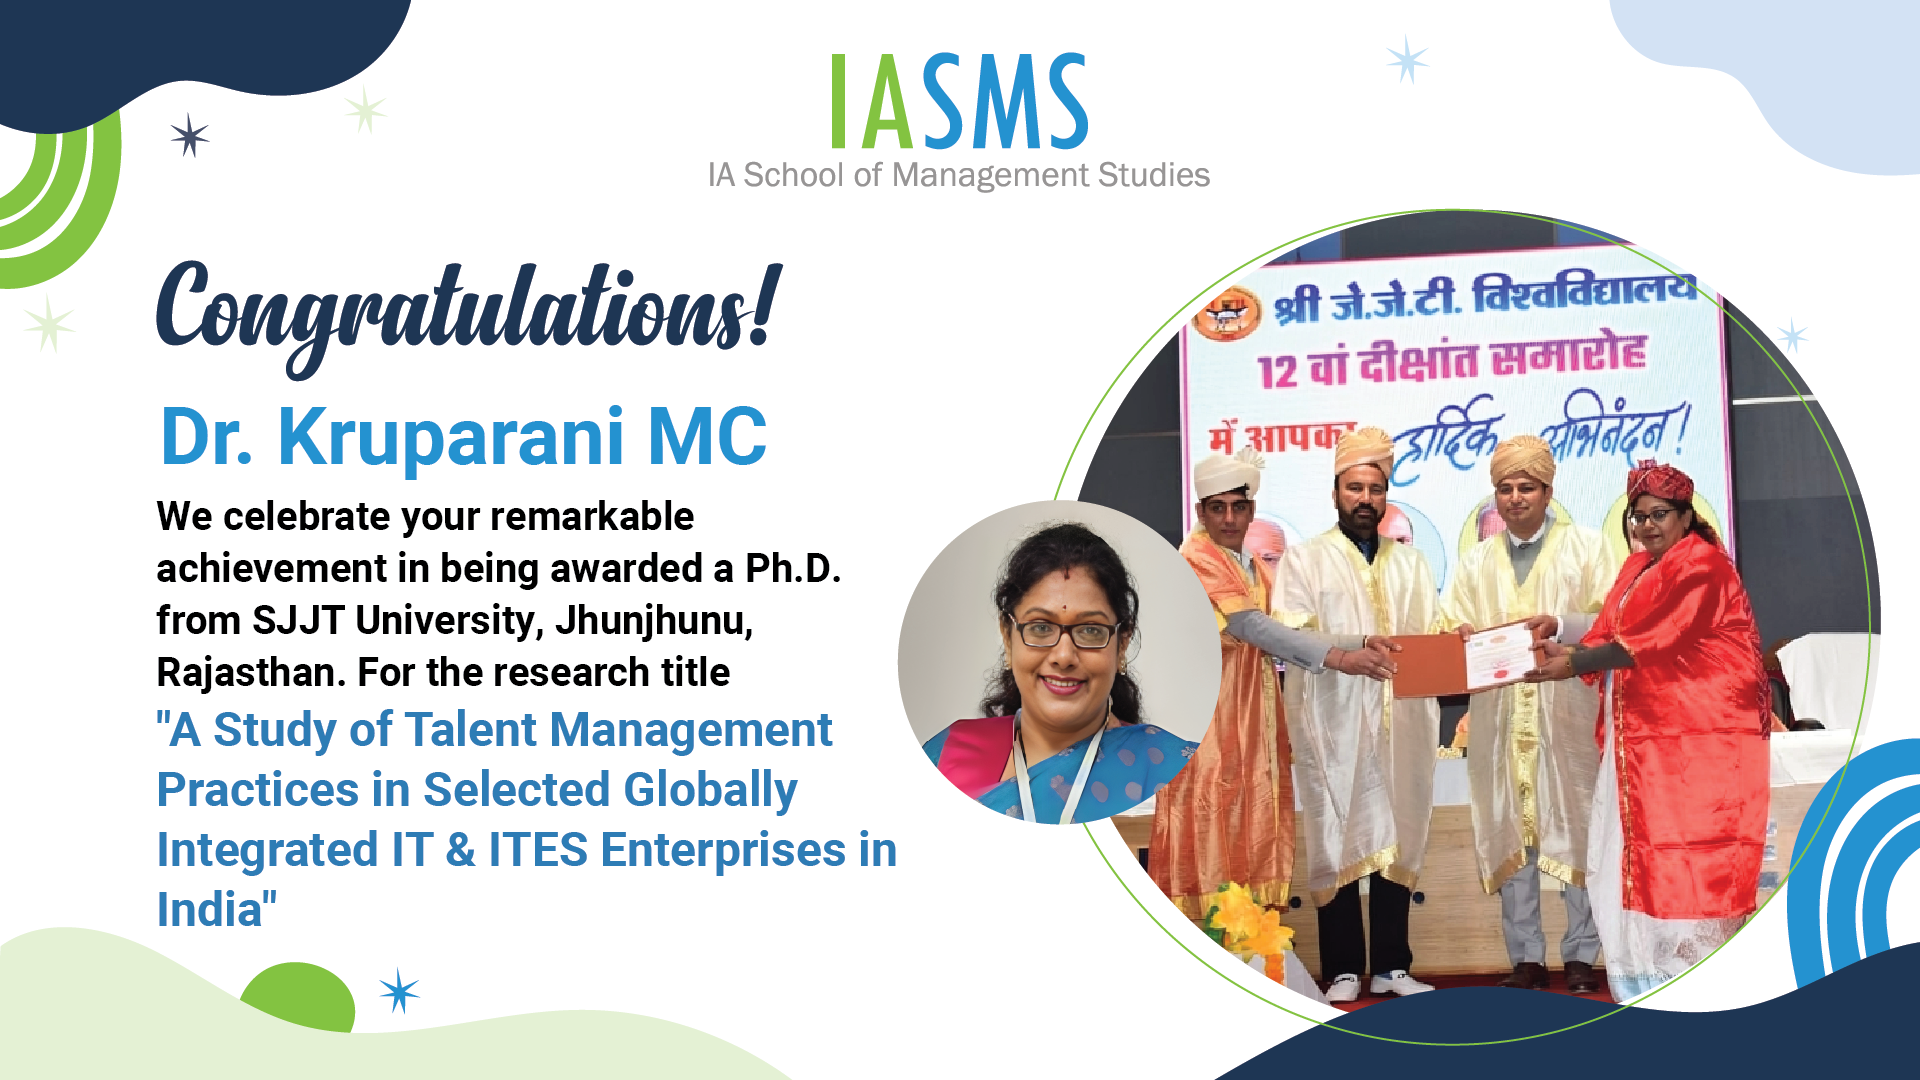 Congratulations to Dr. Kruparani MC